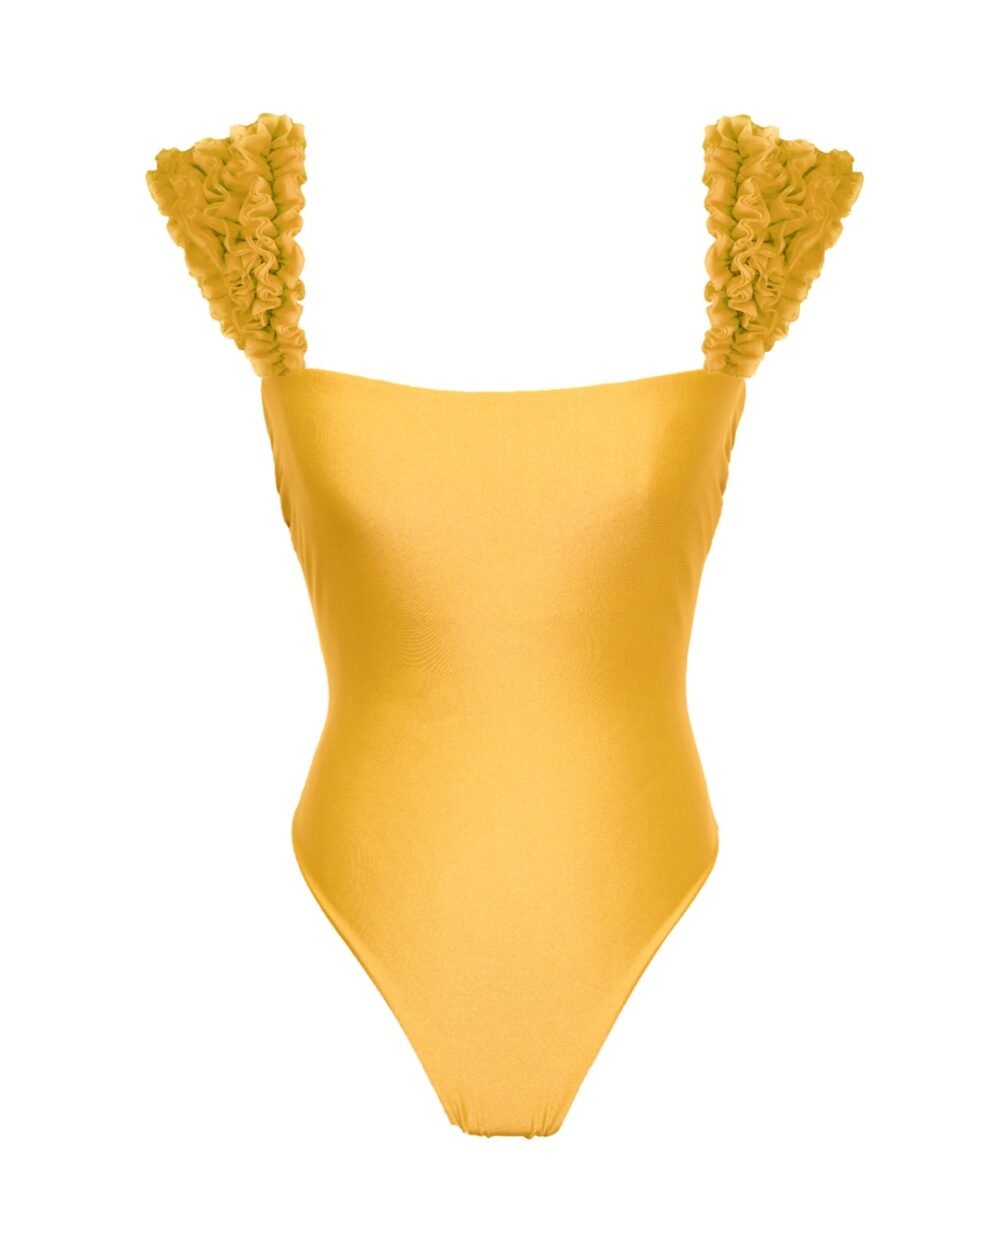 ONE-PIECE SWIMSUIT yellow golden swimwear costume intero giallo elegante